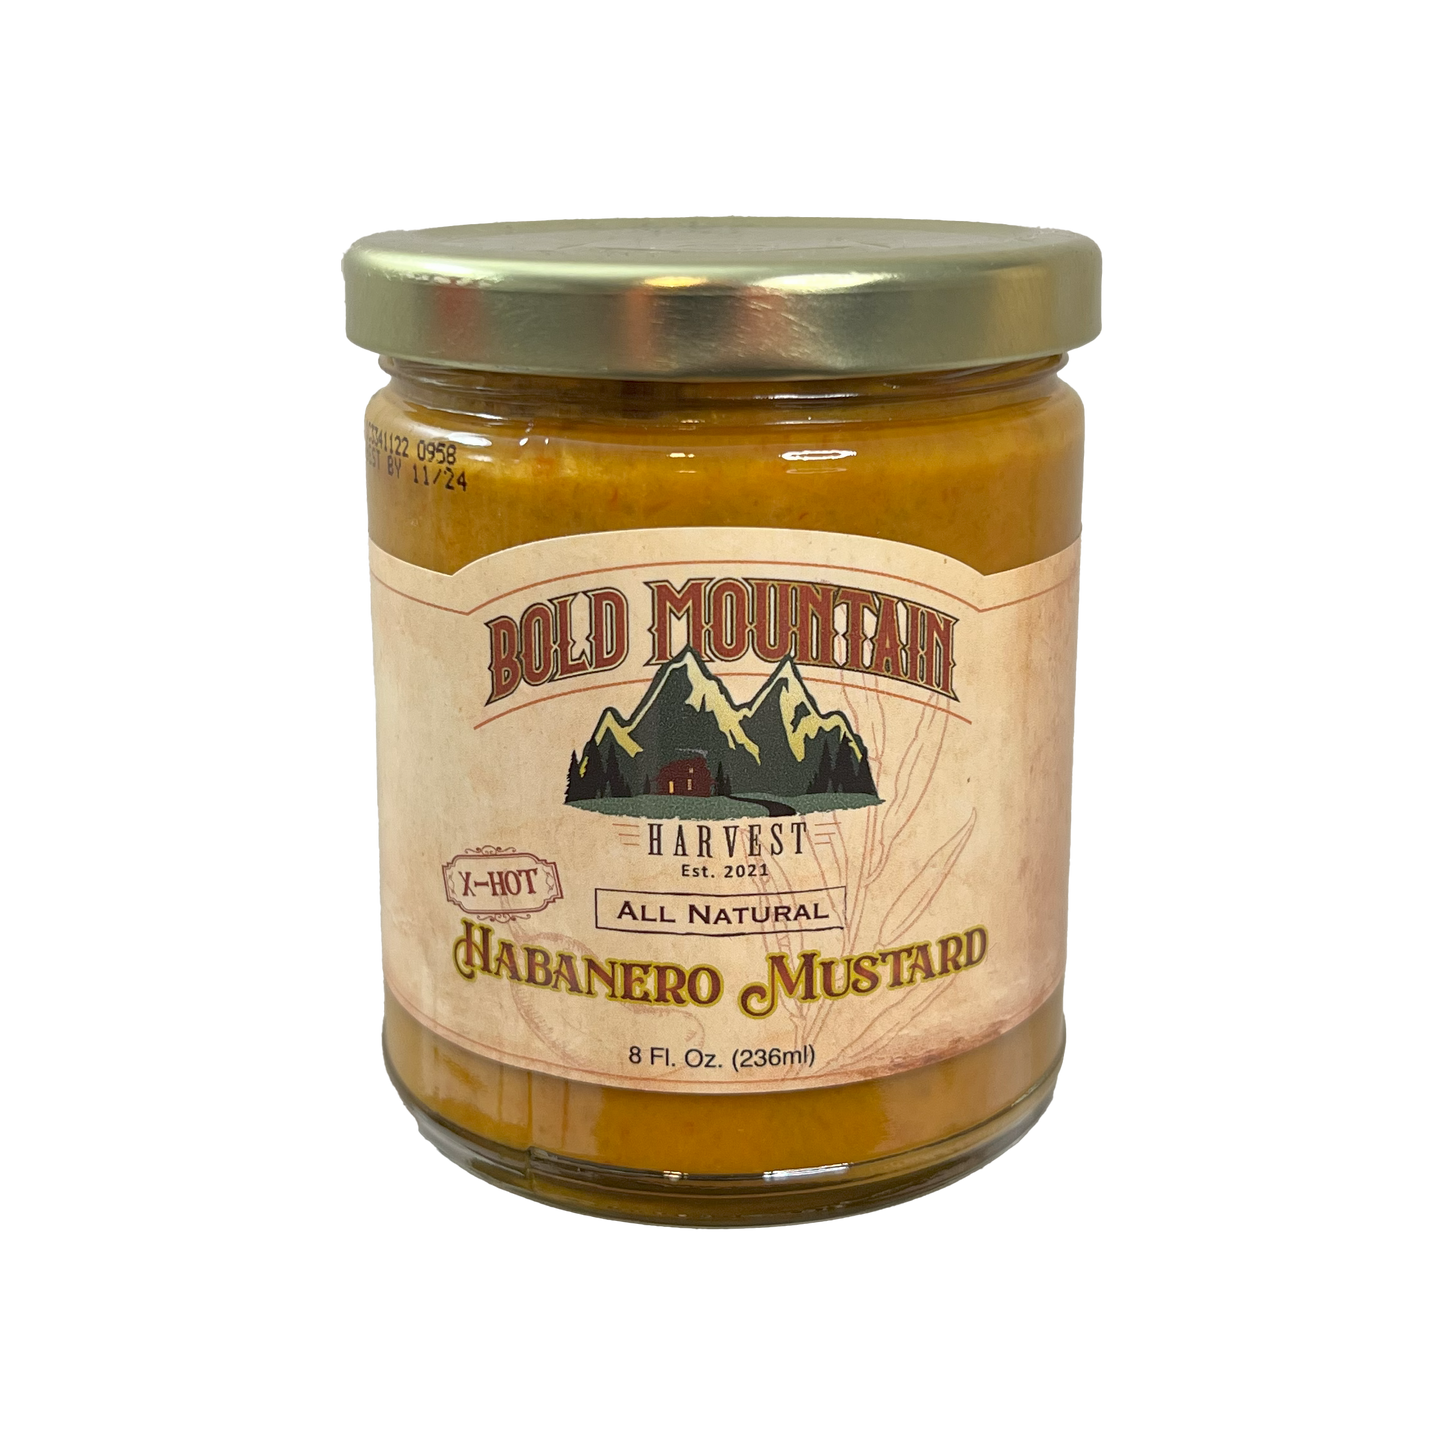 Bold Mountain Habanero Mustard X-Hot